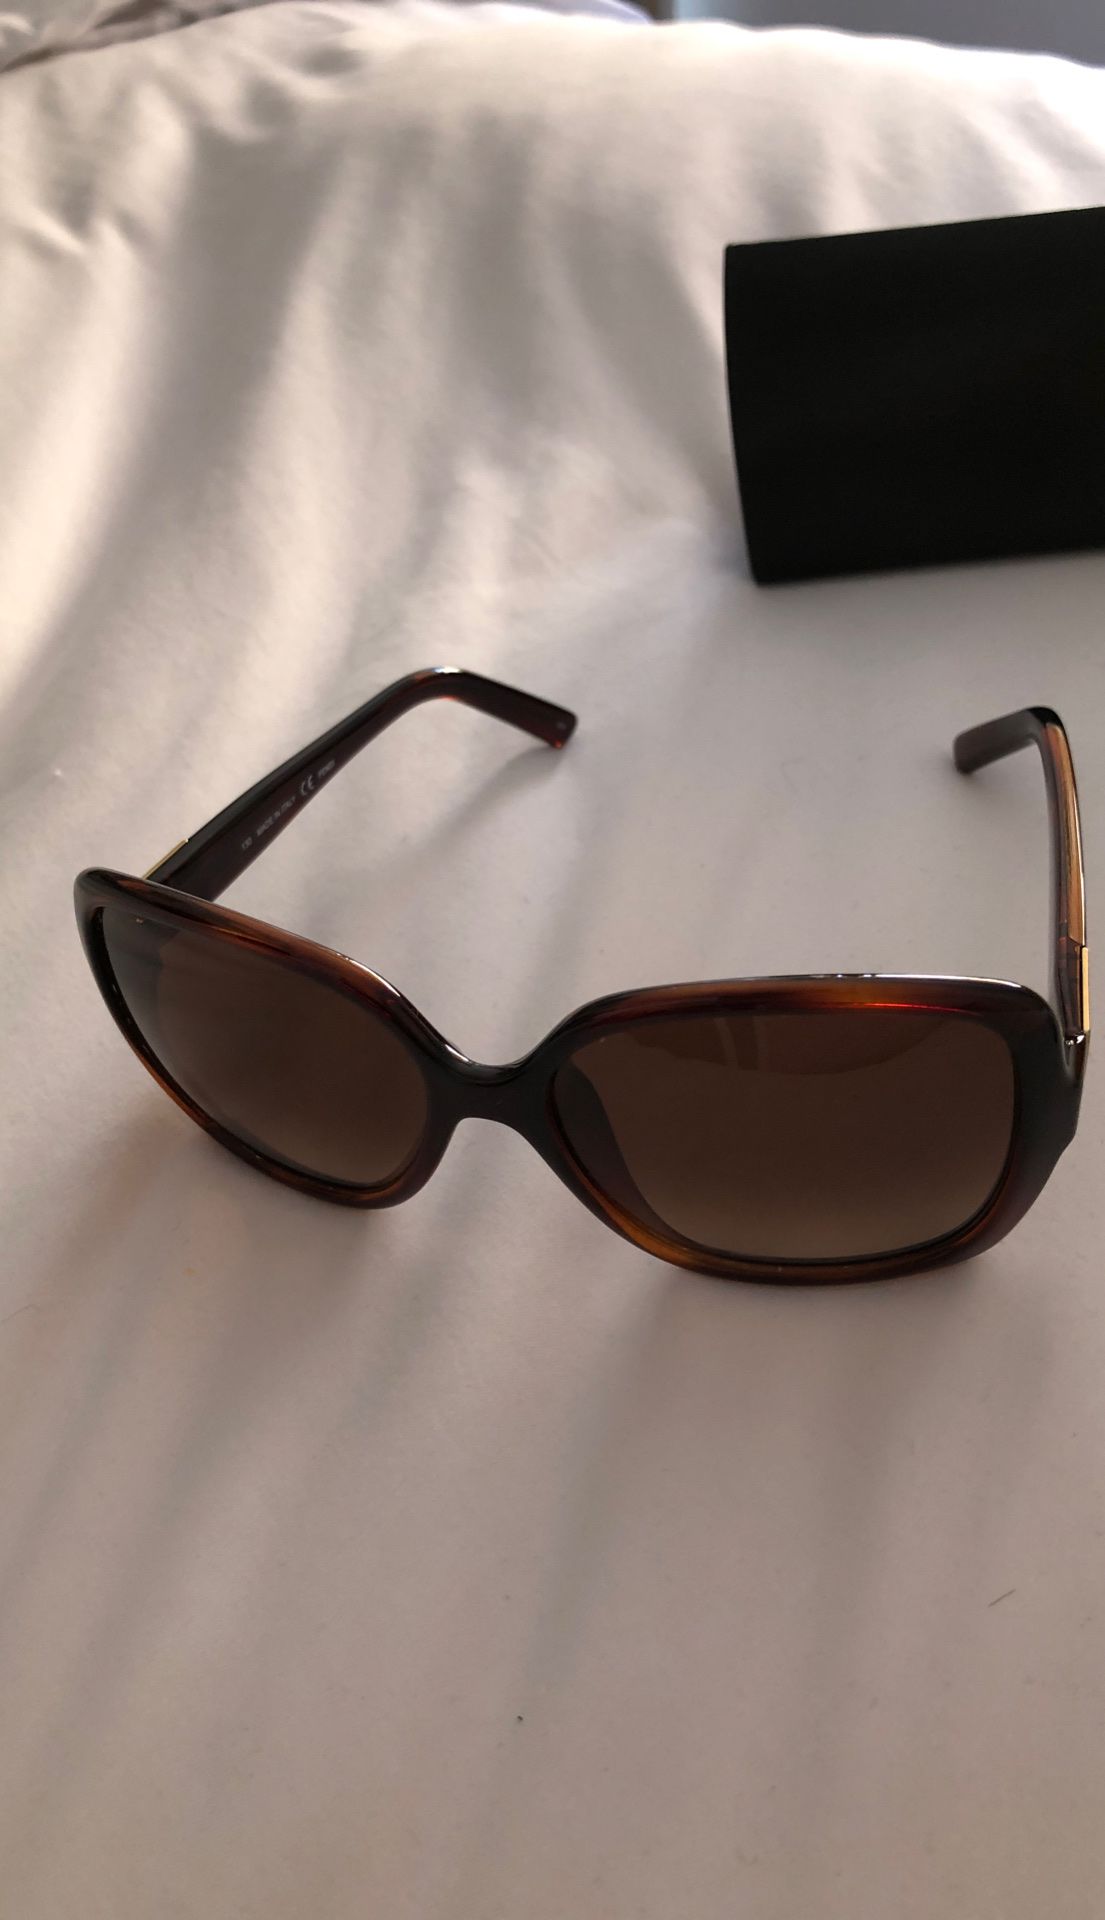 Fendi brown sunglasses with gold logo